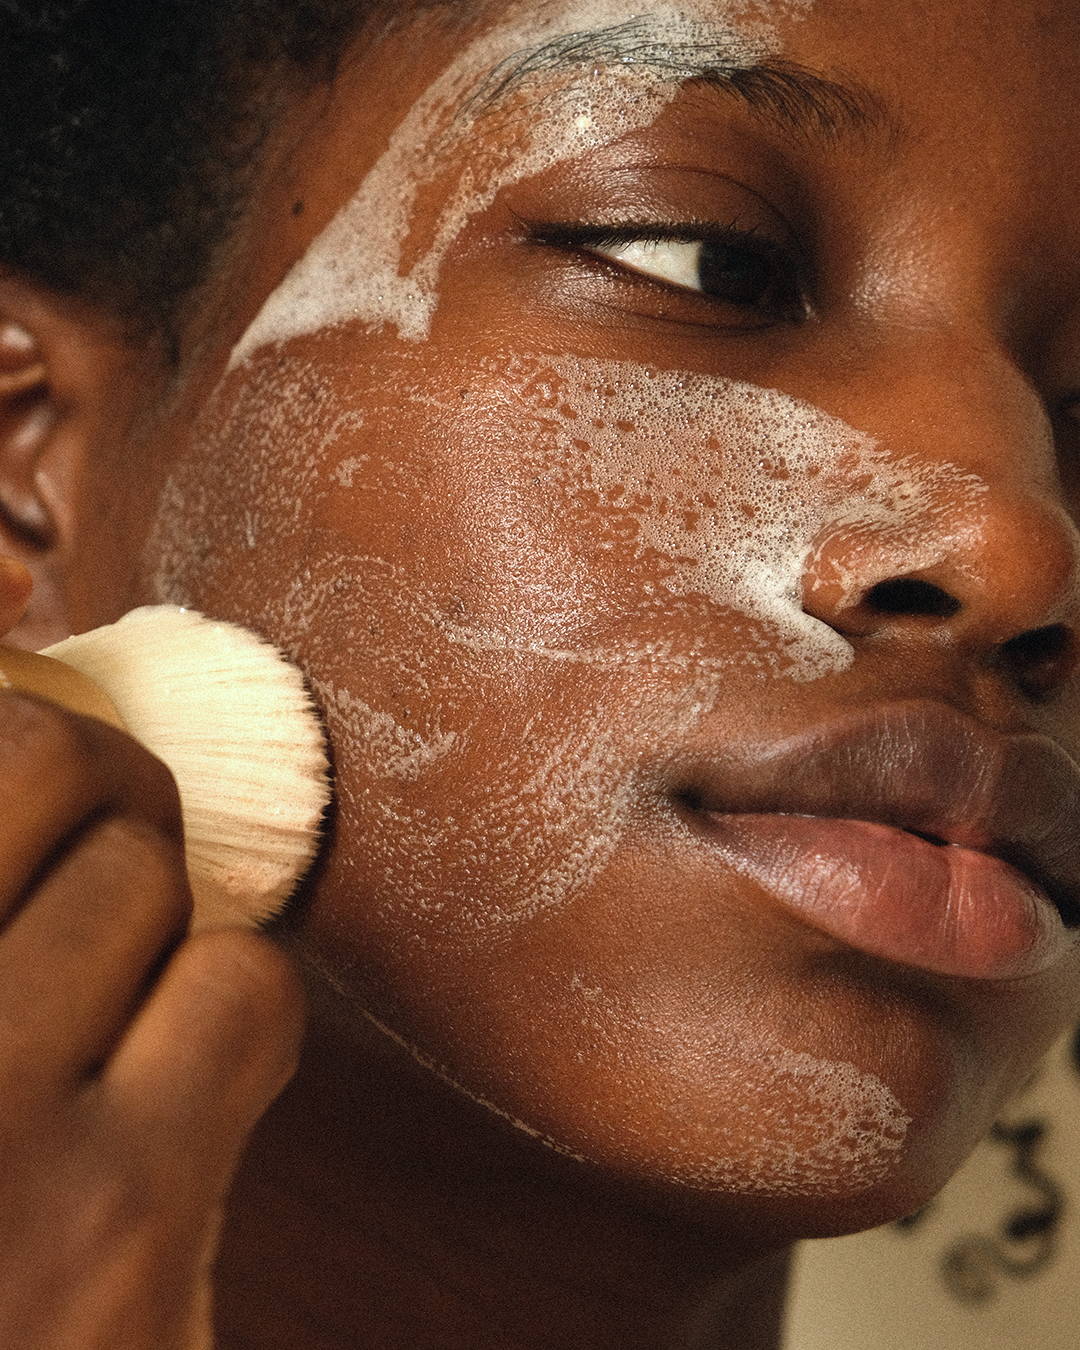 Our tips for an effective homemade face scrub